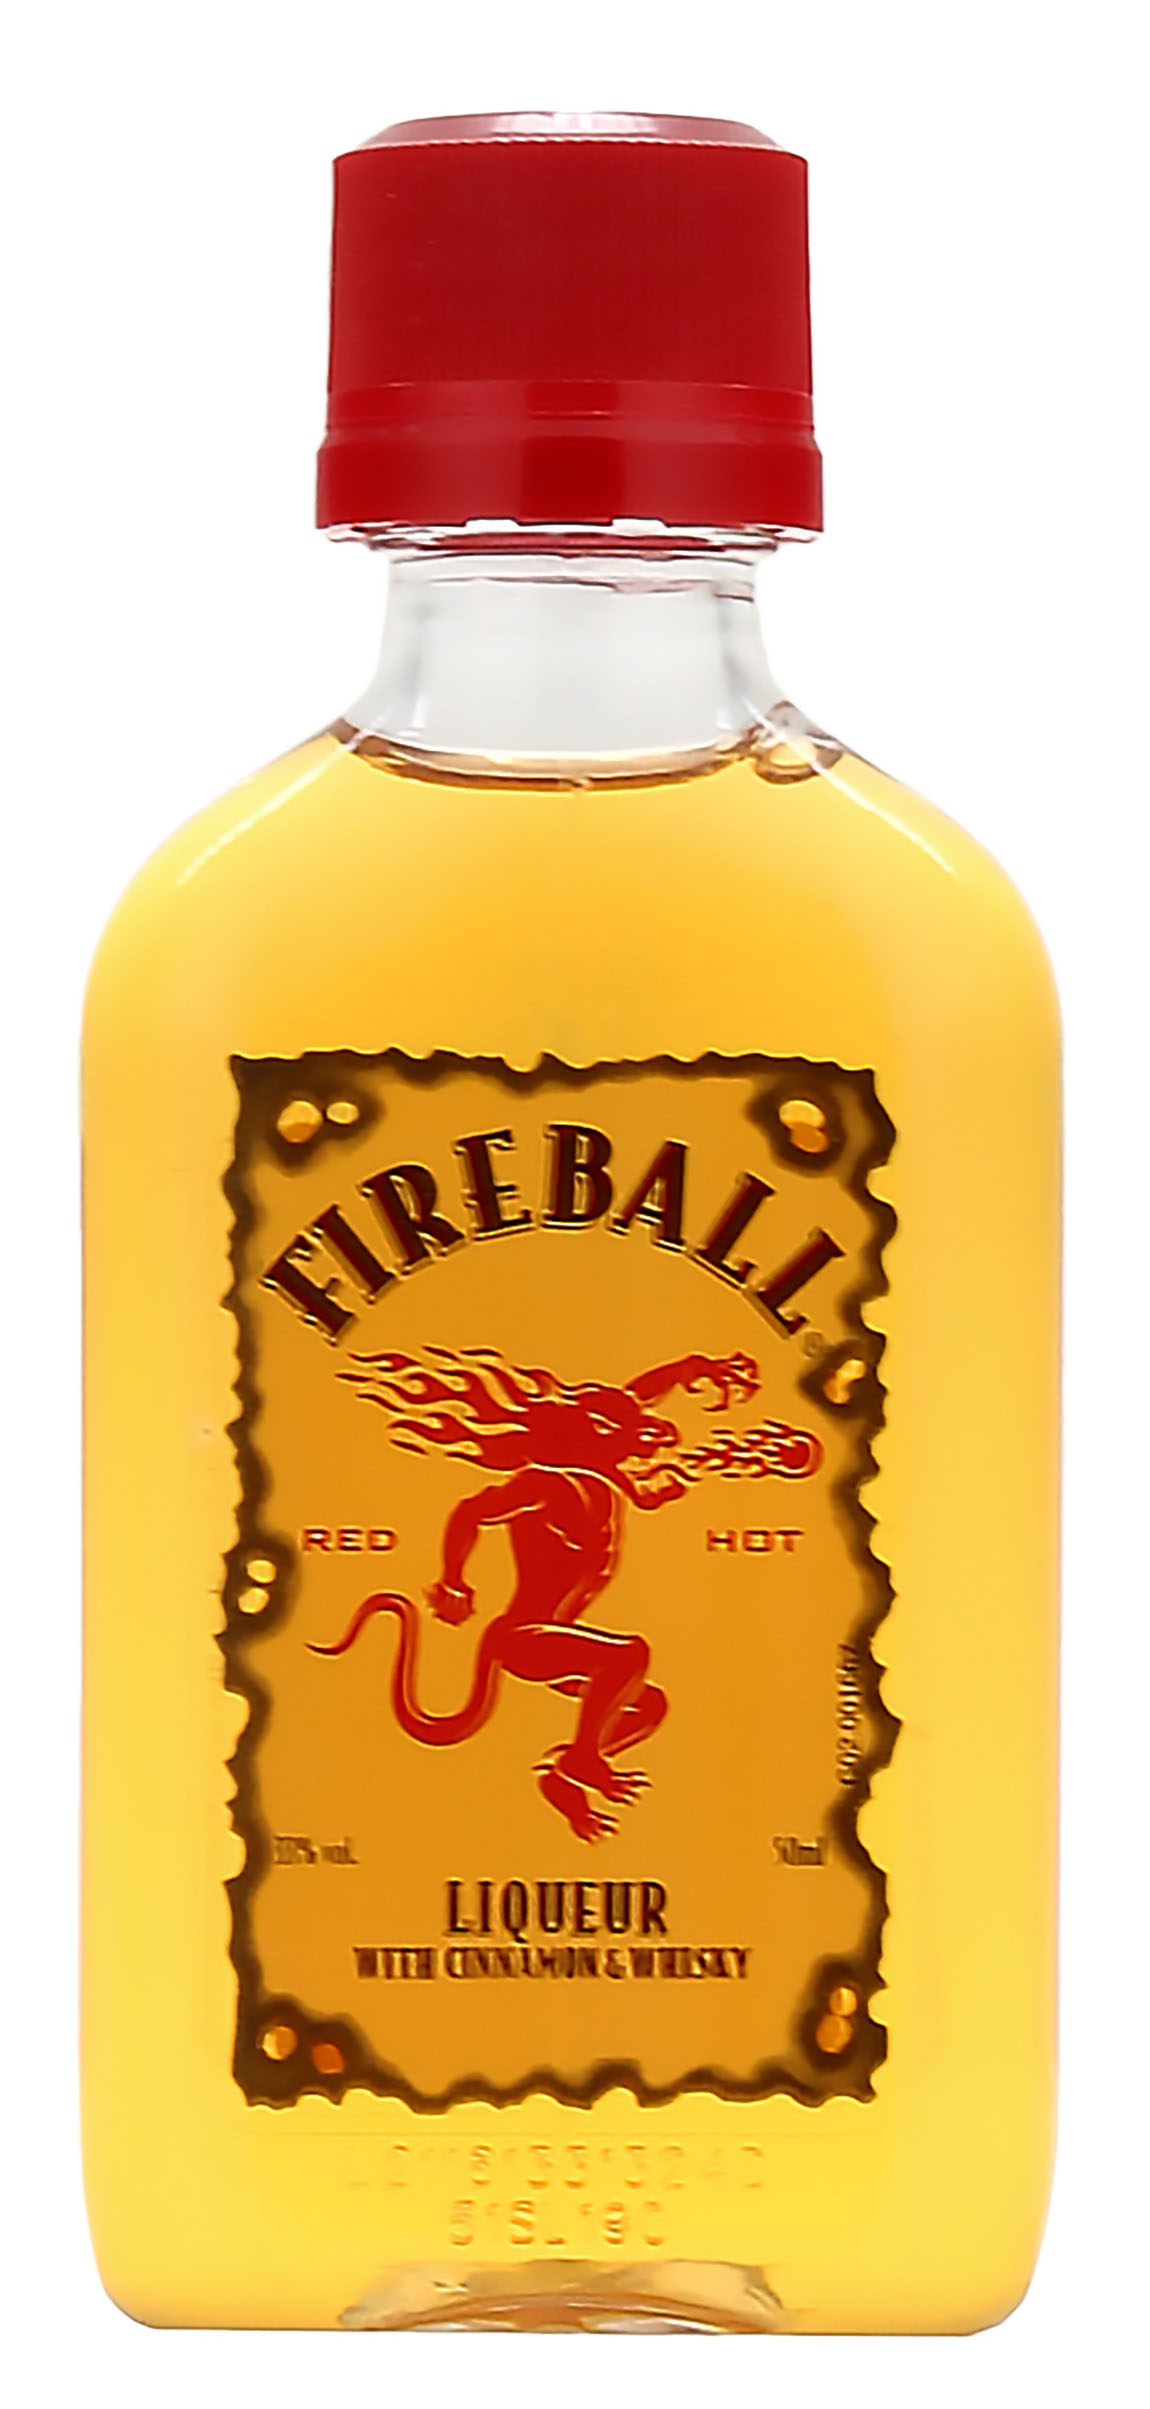 Miniatur Fireball Cinnamon Whiskylikör 33.0% 0,05l